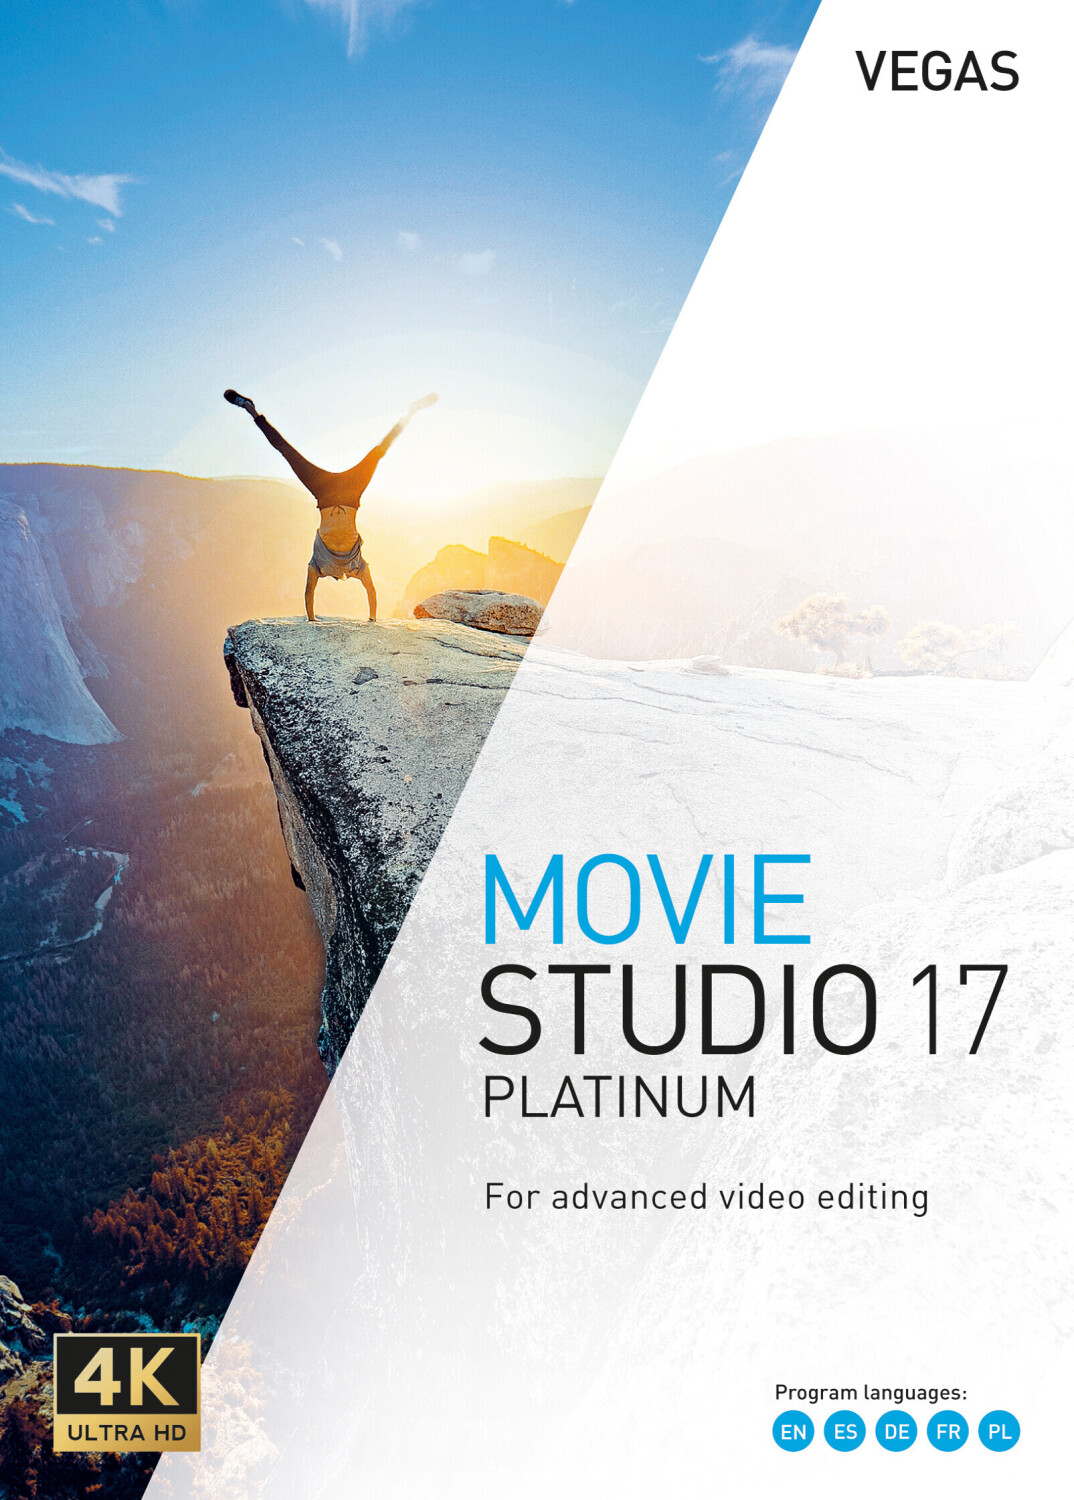 MAGIX Movie Studio Platinum 23.0.1.191 instal the new version for android